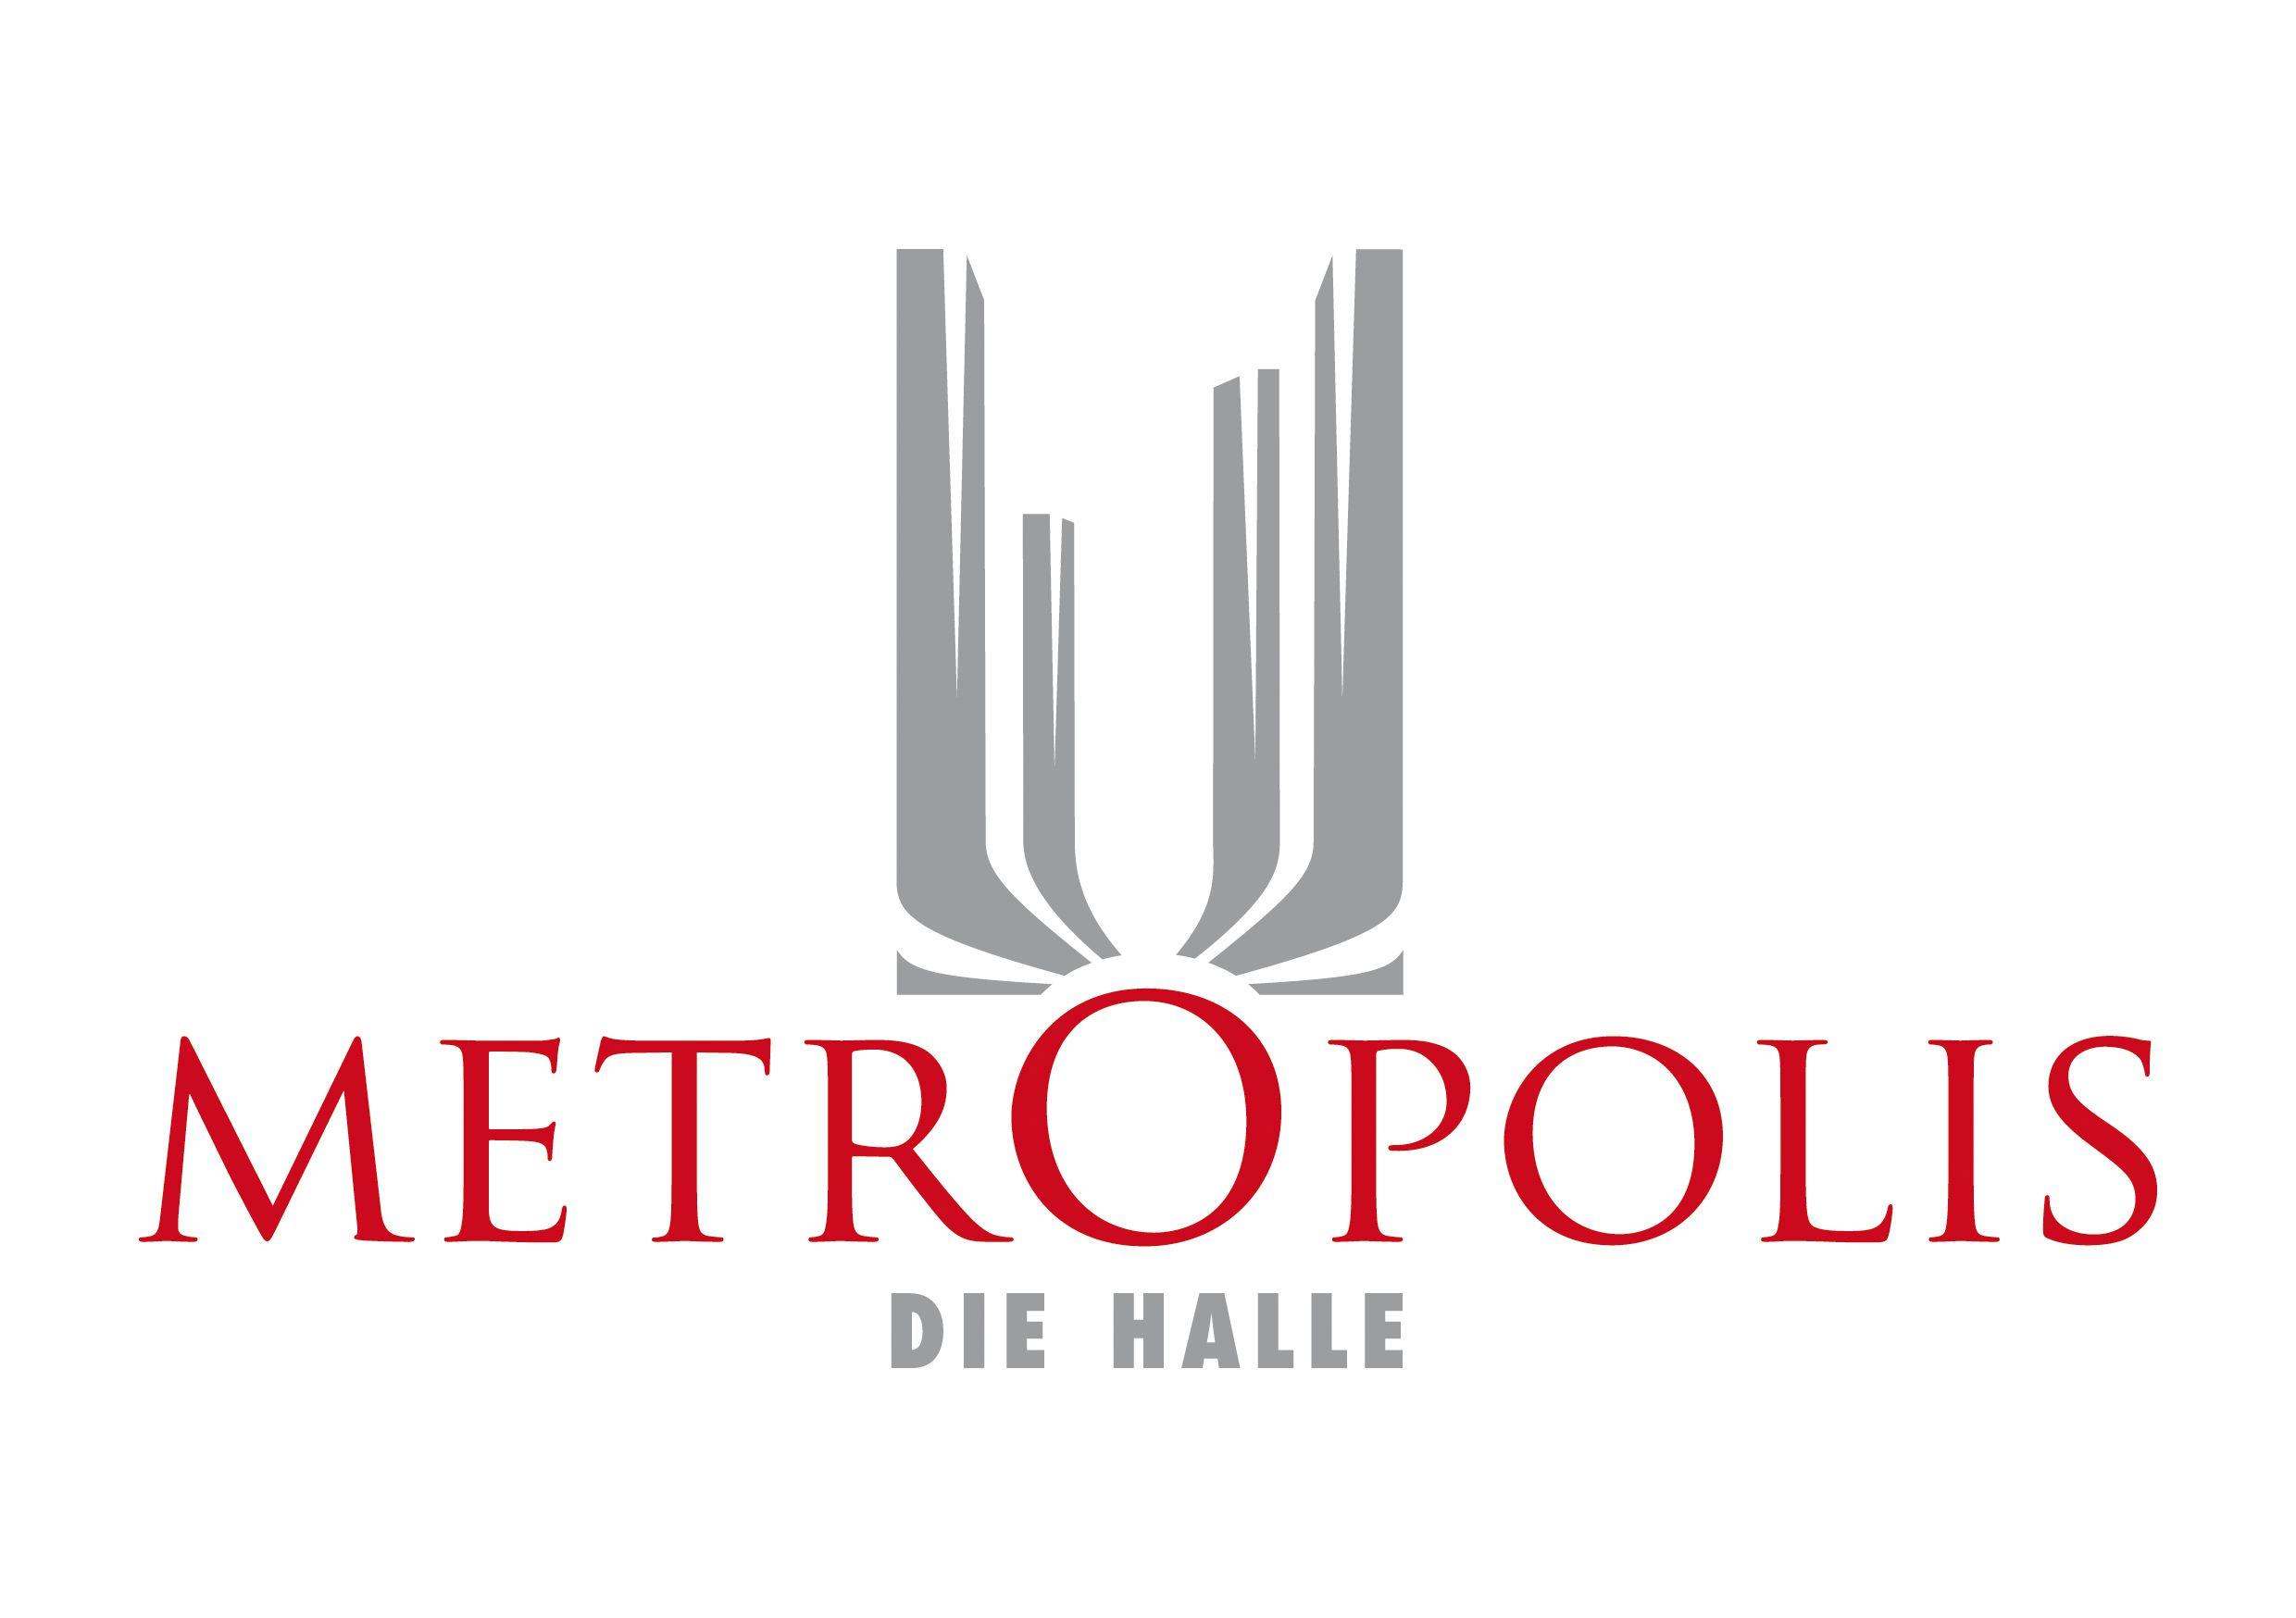 Deutsch Logo - File:Logo METROPOLIS deutsch.jpg - Wikimedia Commons